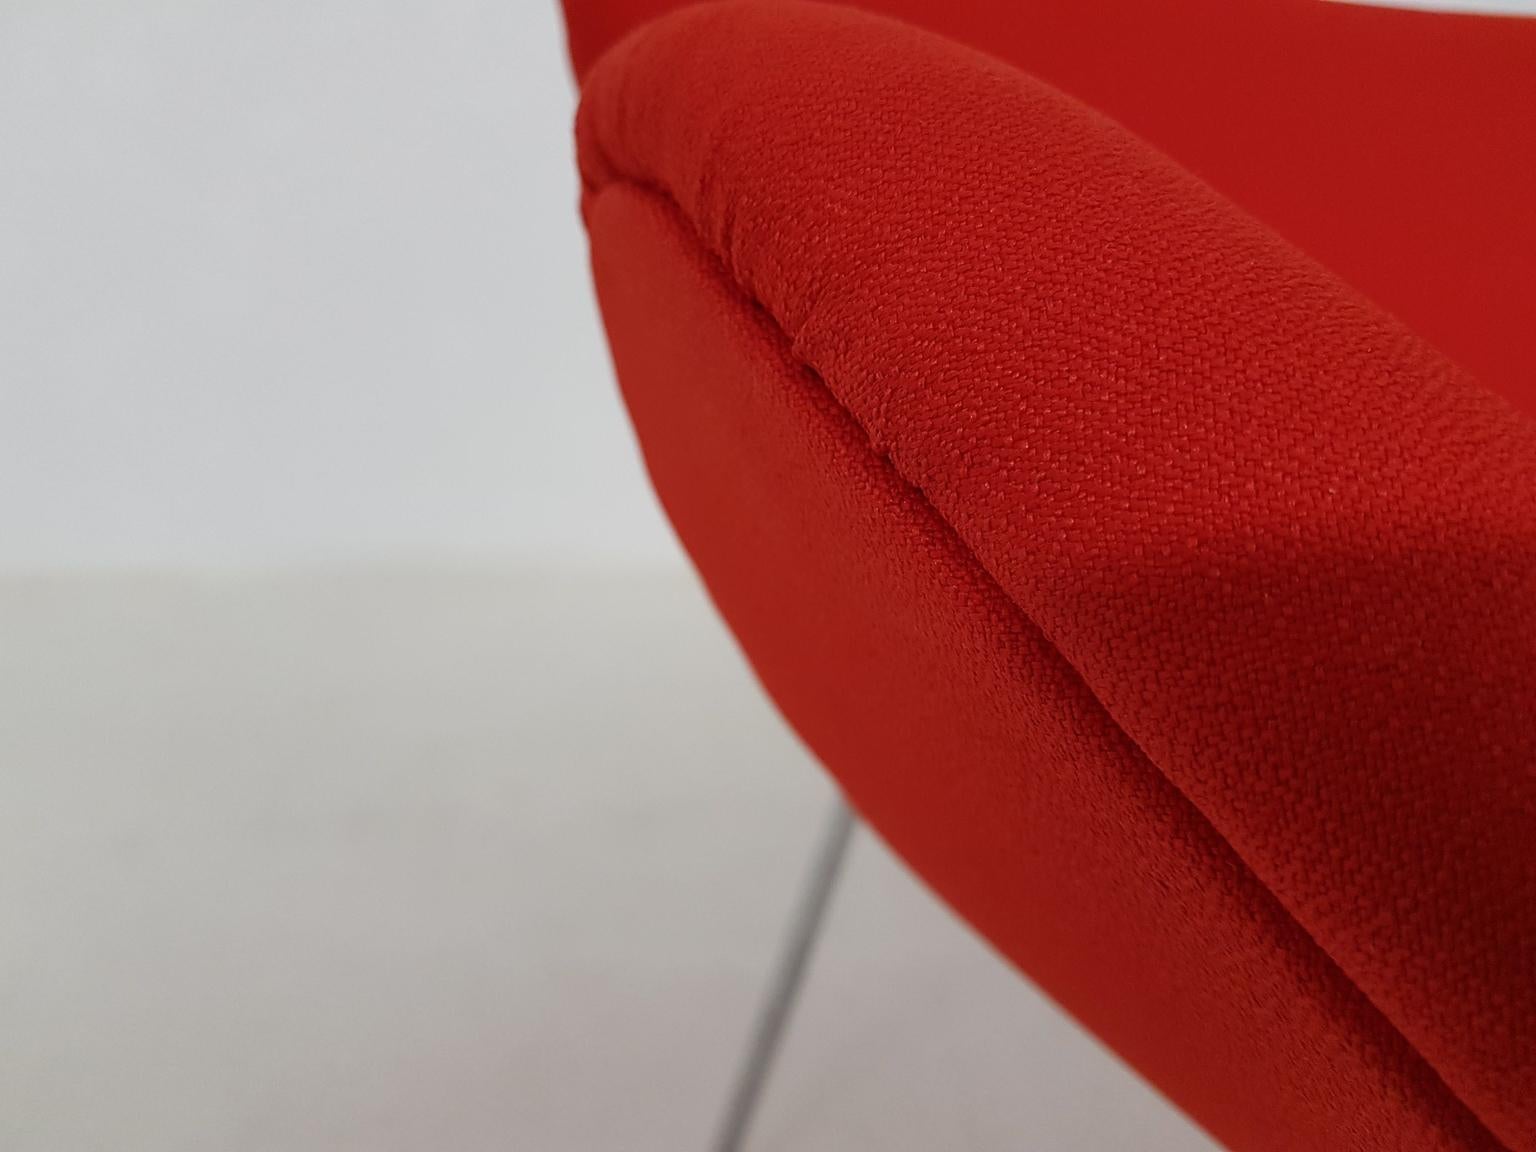 Stainless Steel Orange Slice Lounge Chair by Pierre Paulin for Artifort Dutch Modern Design 1961